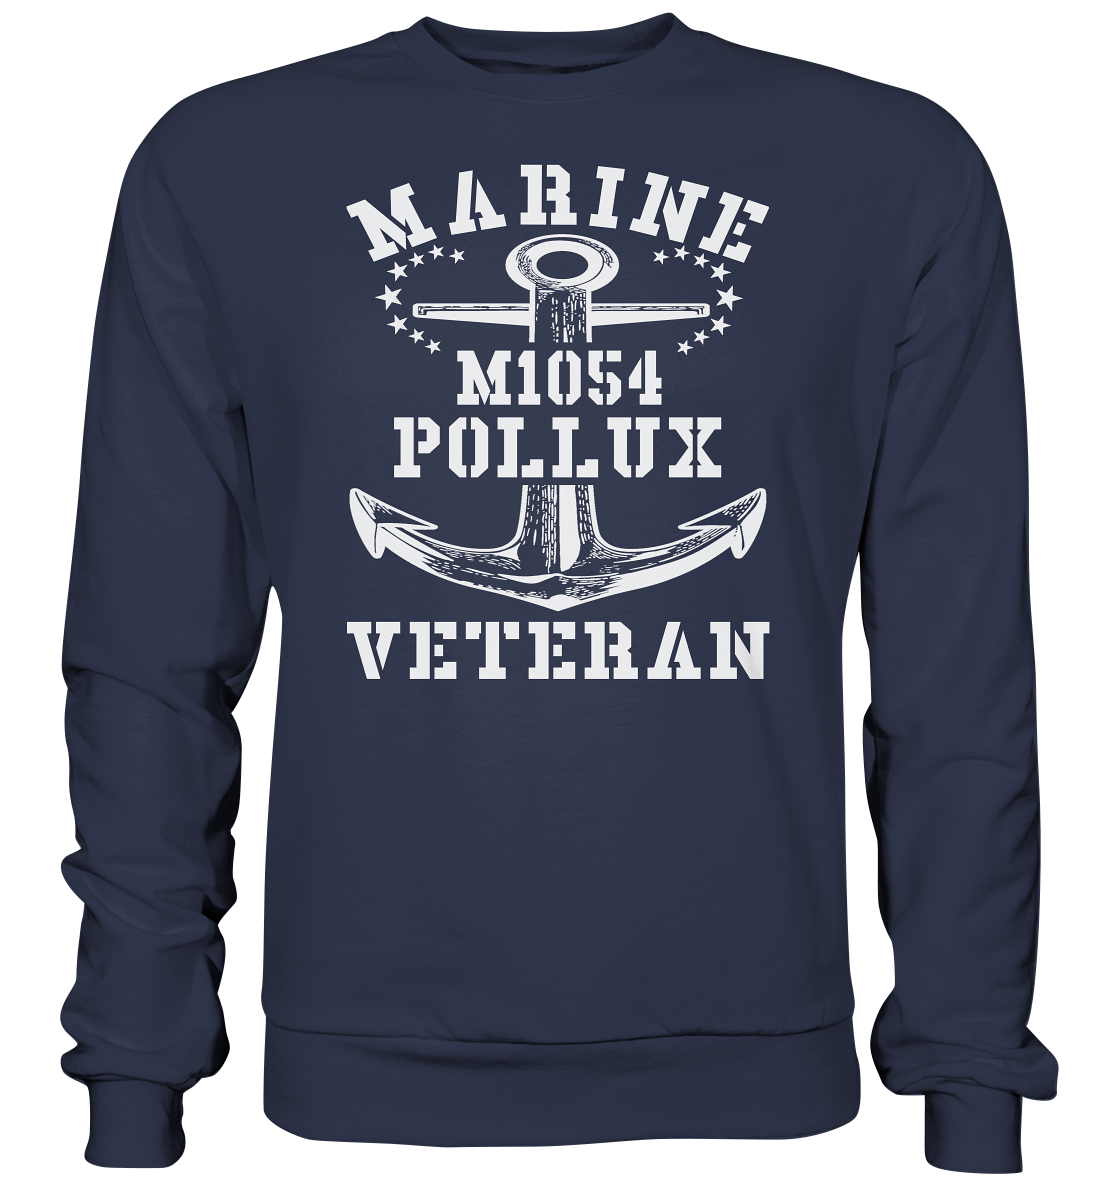 SM-Boot M1054 POLLUX Marine Veteran - Premium Sweatshirt